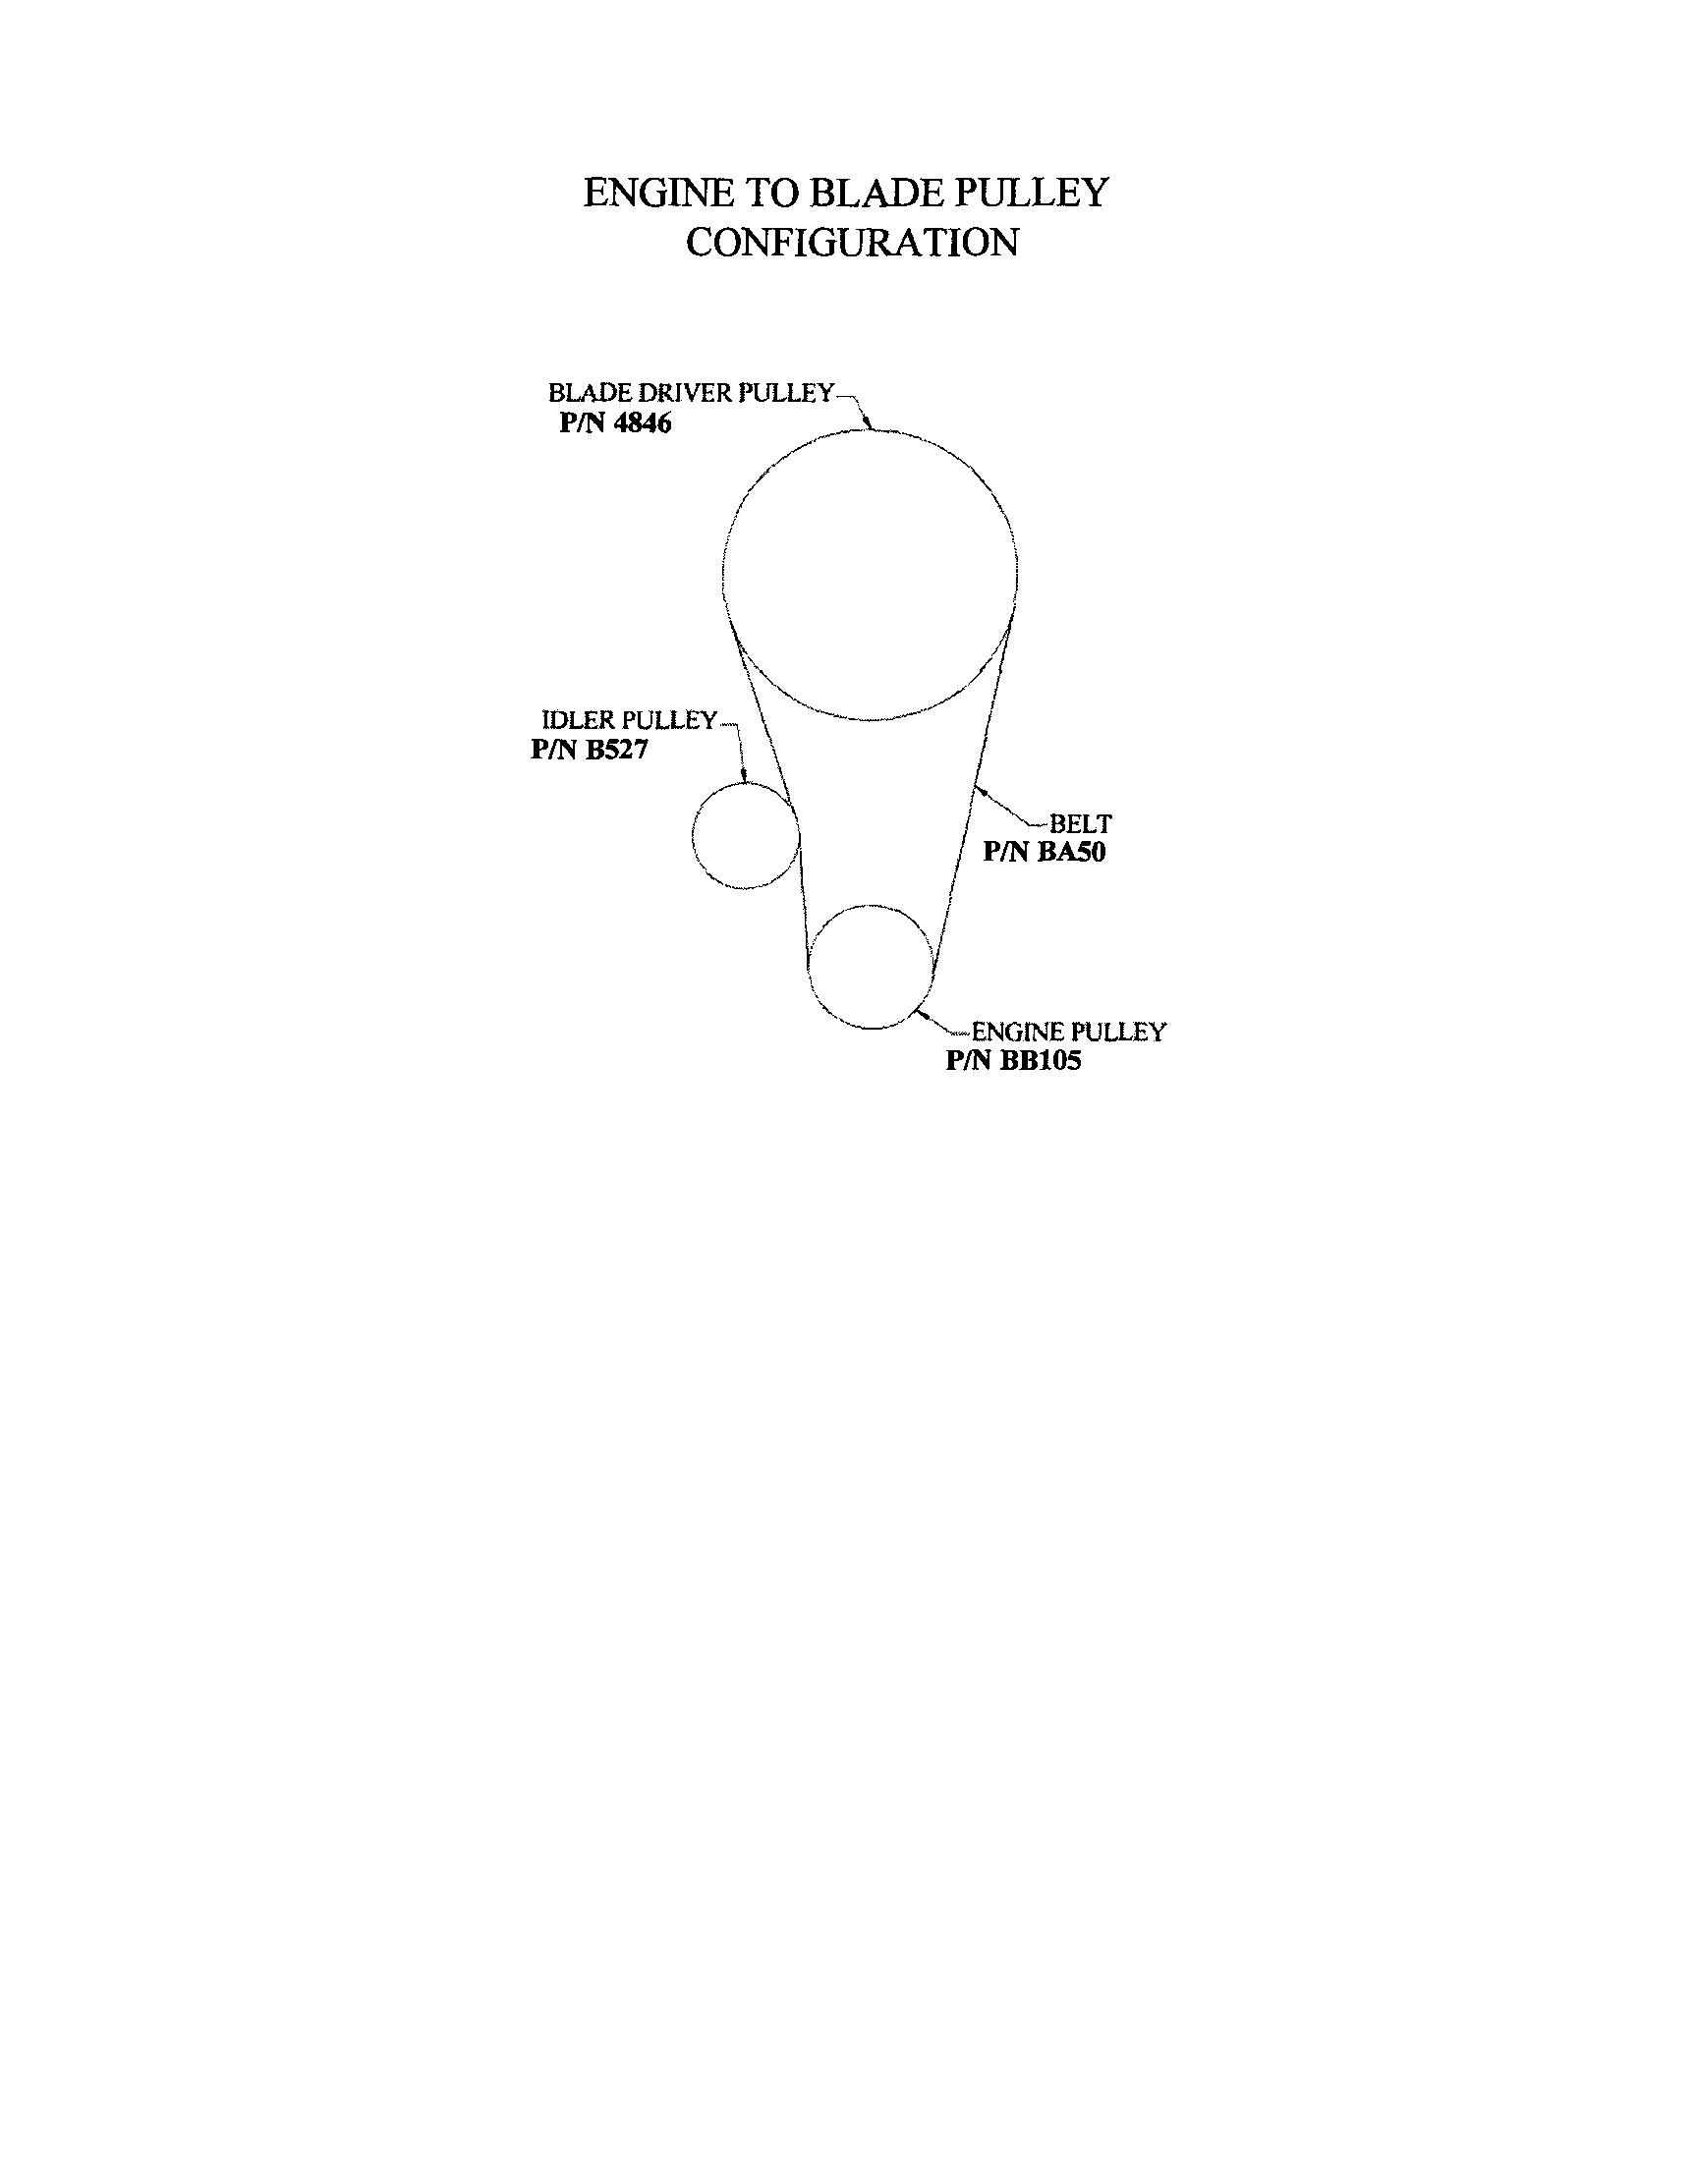 swisher zt2452a parts diagram